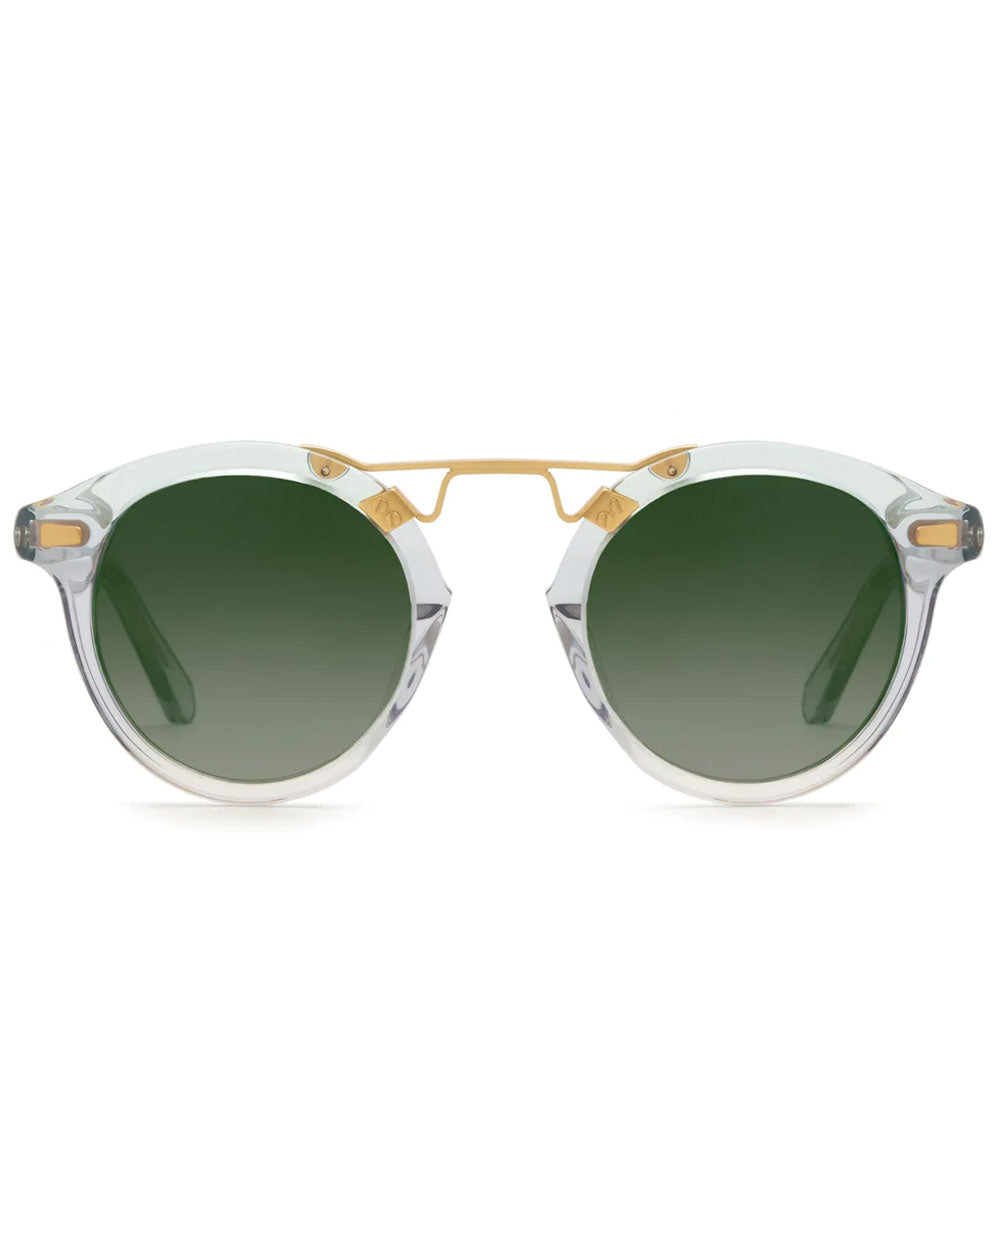 STL II Sunglasses in Lagoon 24K Mirrored